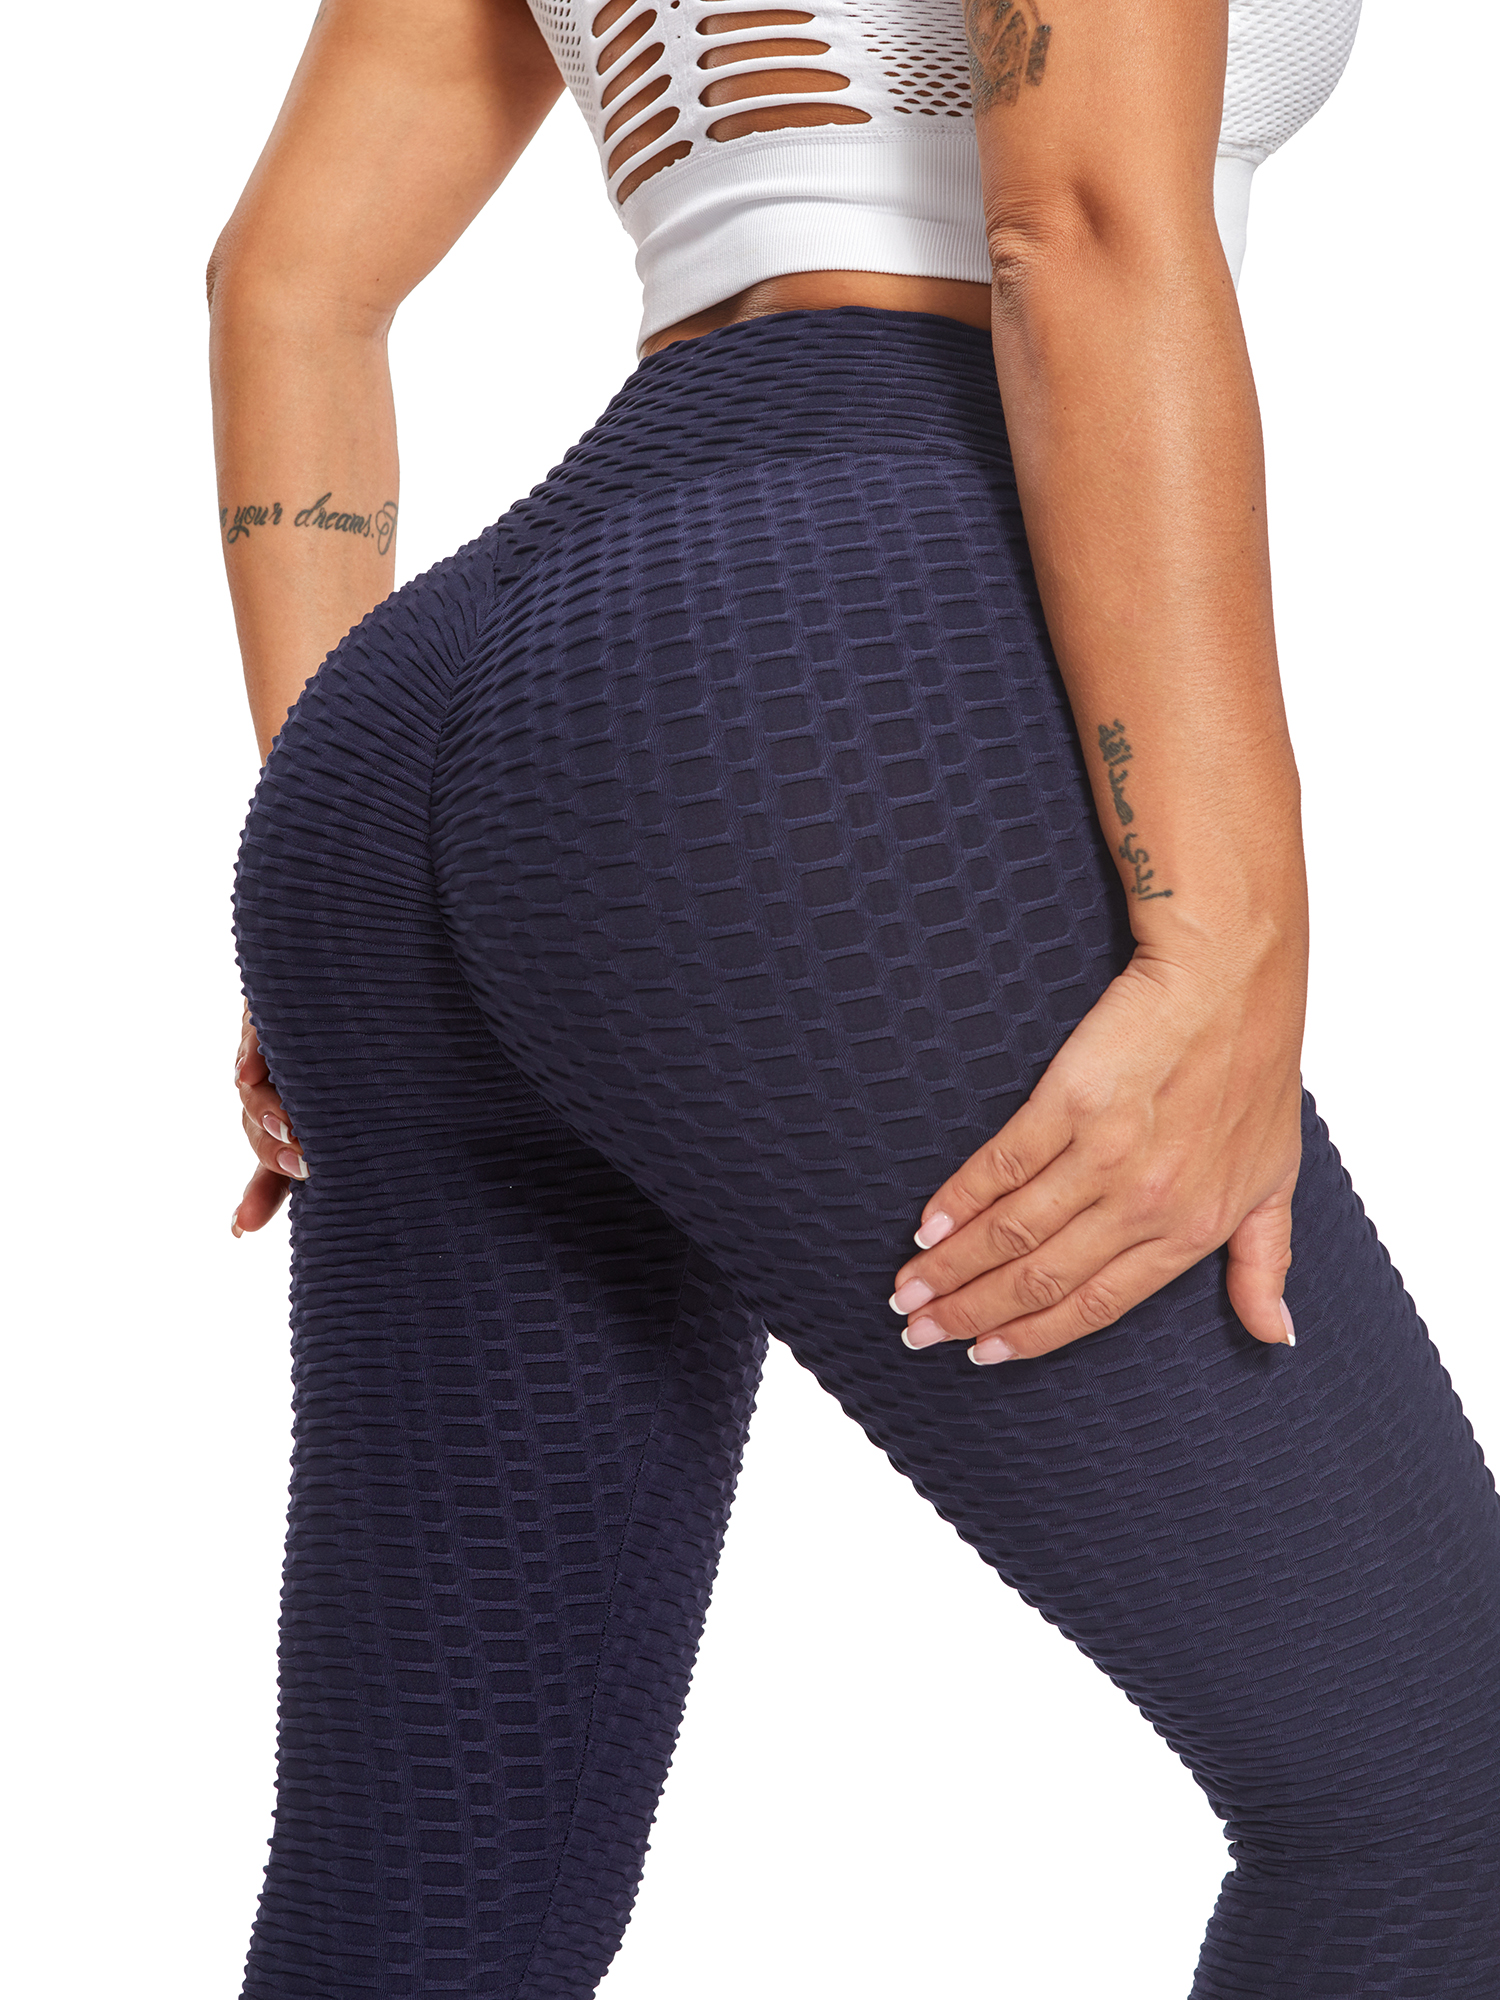  Womens High Waist Yoga Pants Tummy Control Slimming Booty  Leggings Workout Running Butt Lift Tights XL A-Pink